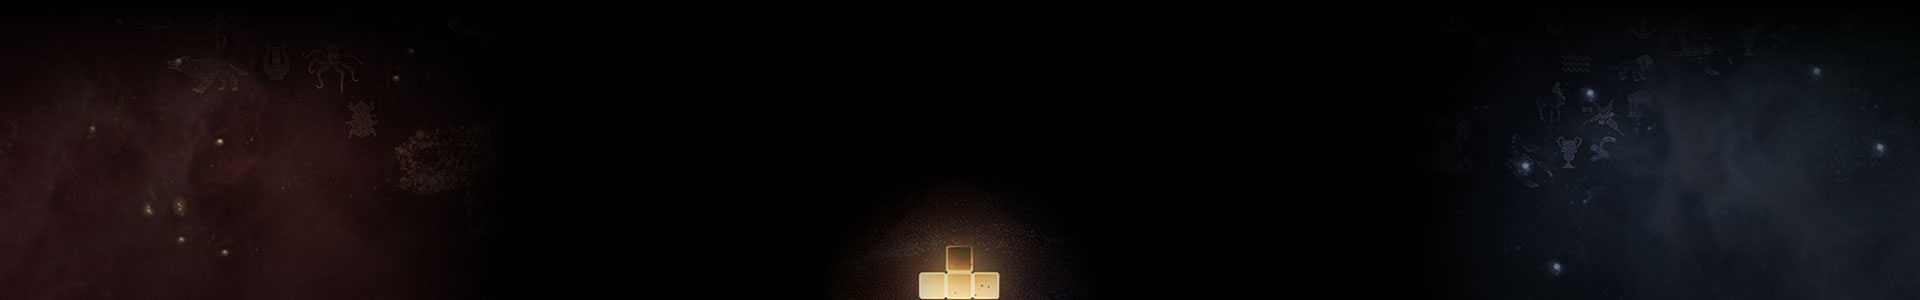 A glowing Tetris piece sits among the stars.